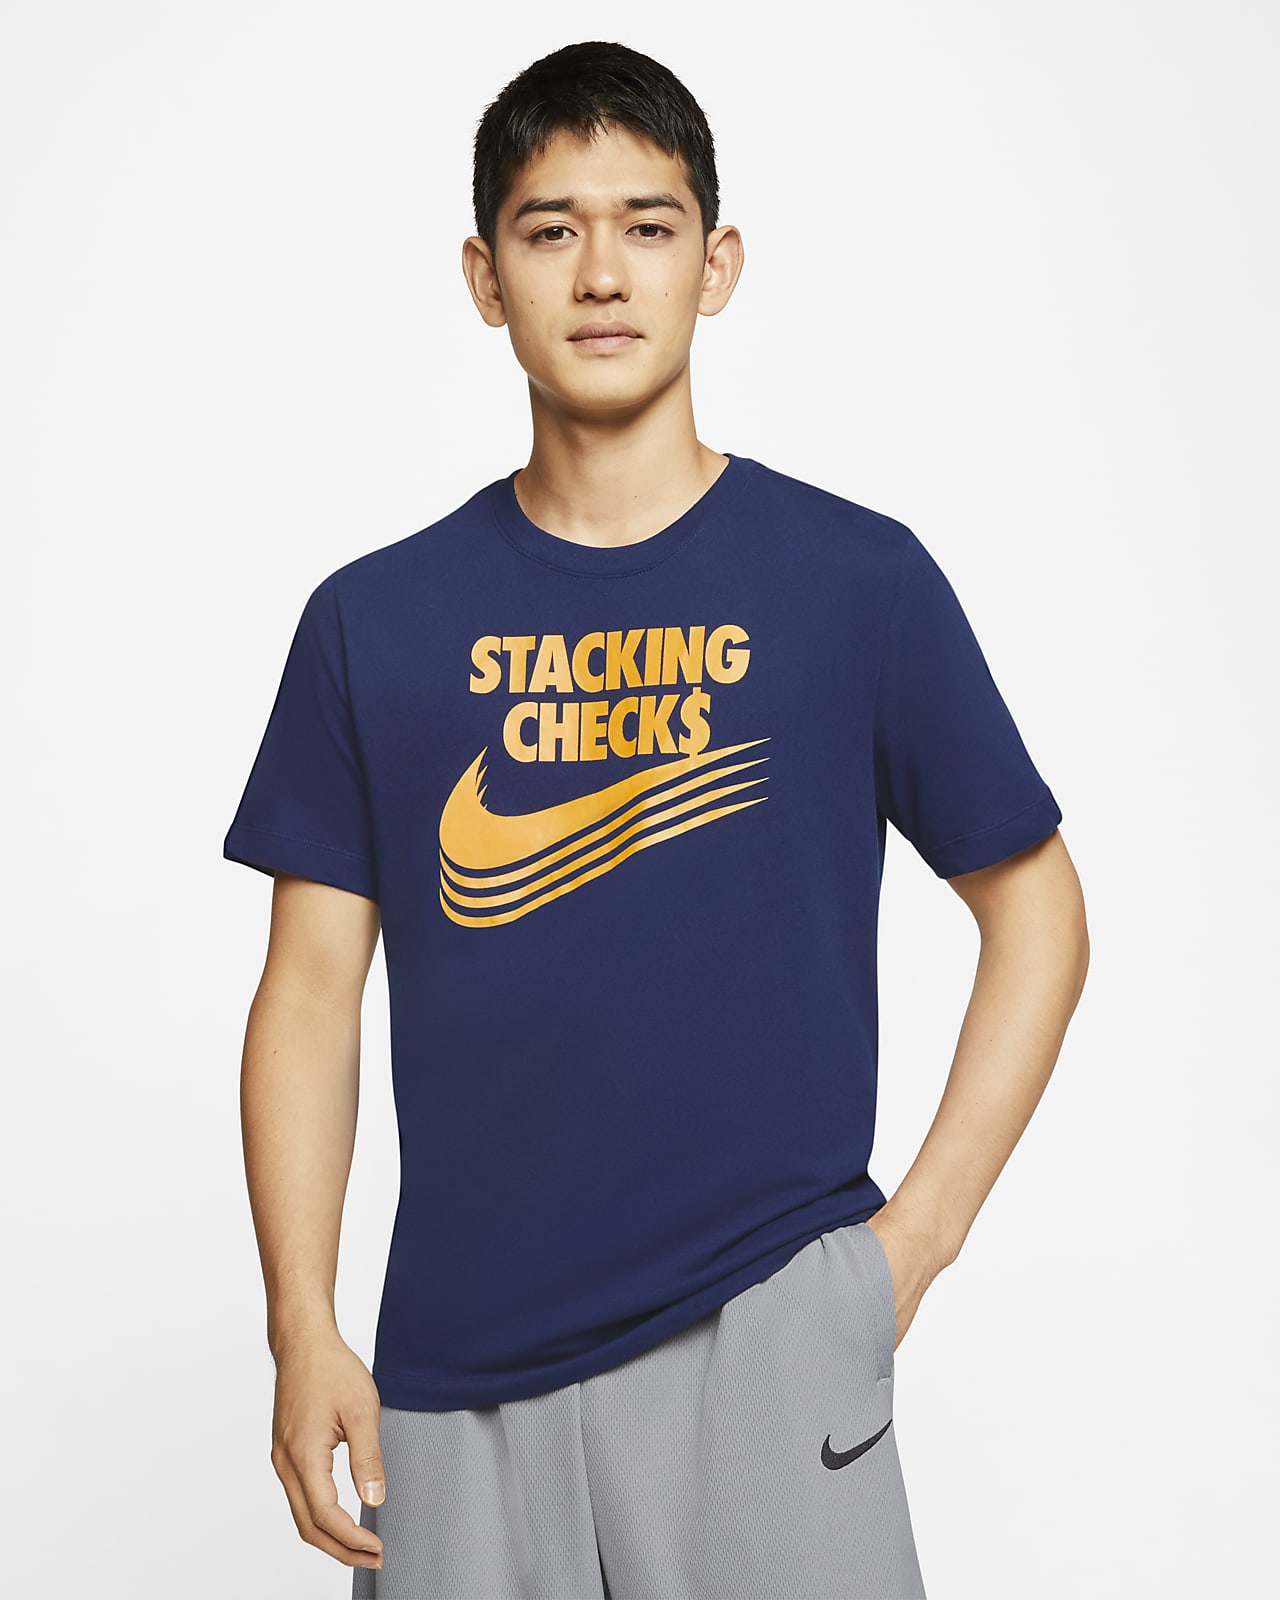 NIKE公式】ナイキ Dri-FIT スタッキング チェック メンズ バスケットボール Tシャツ.オンラインストア (通販サイト)